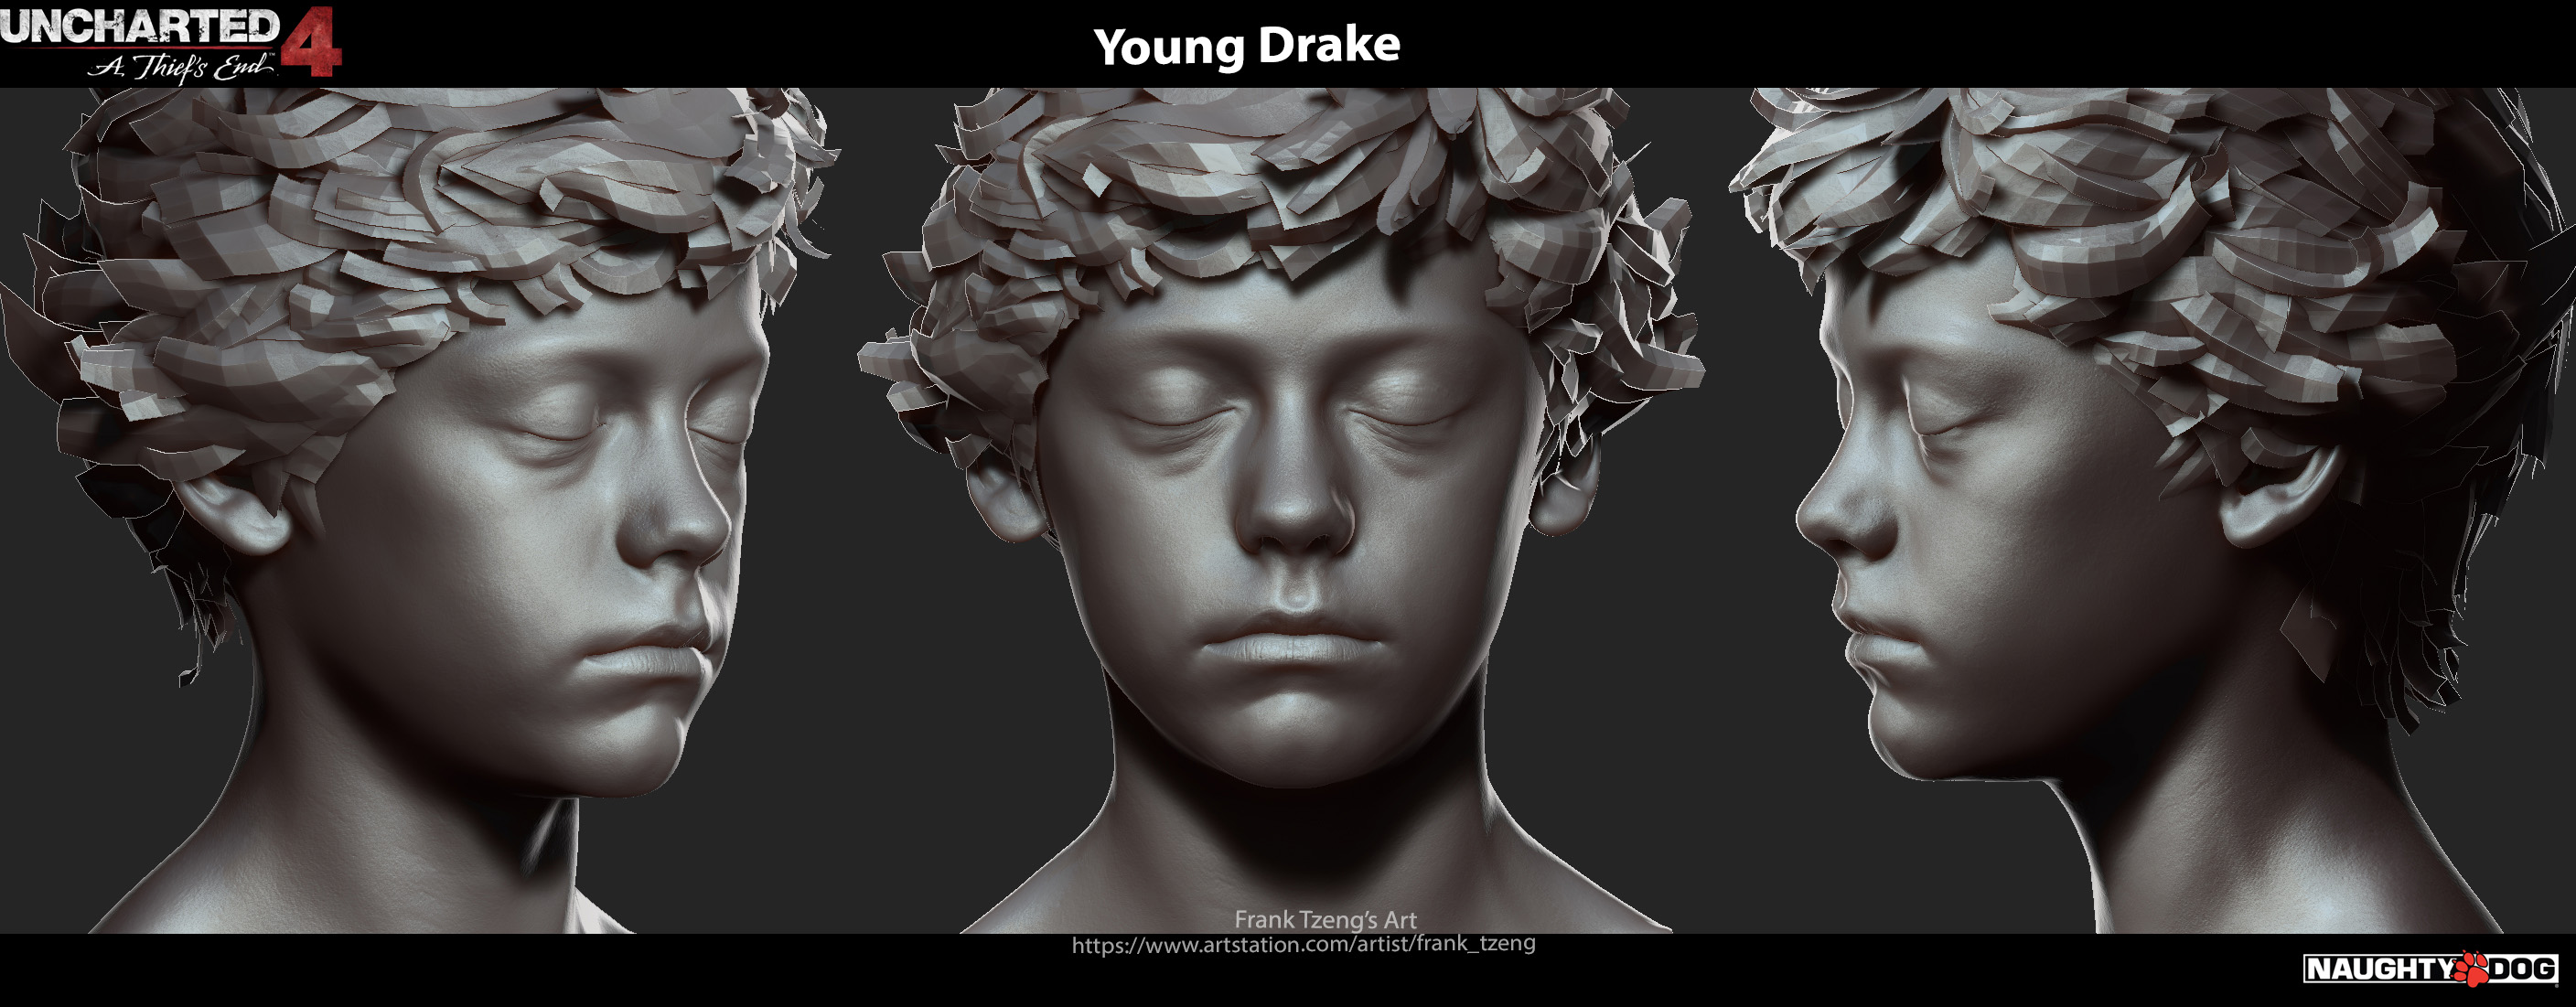 young-drake-head-sculpt small.jpg